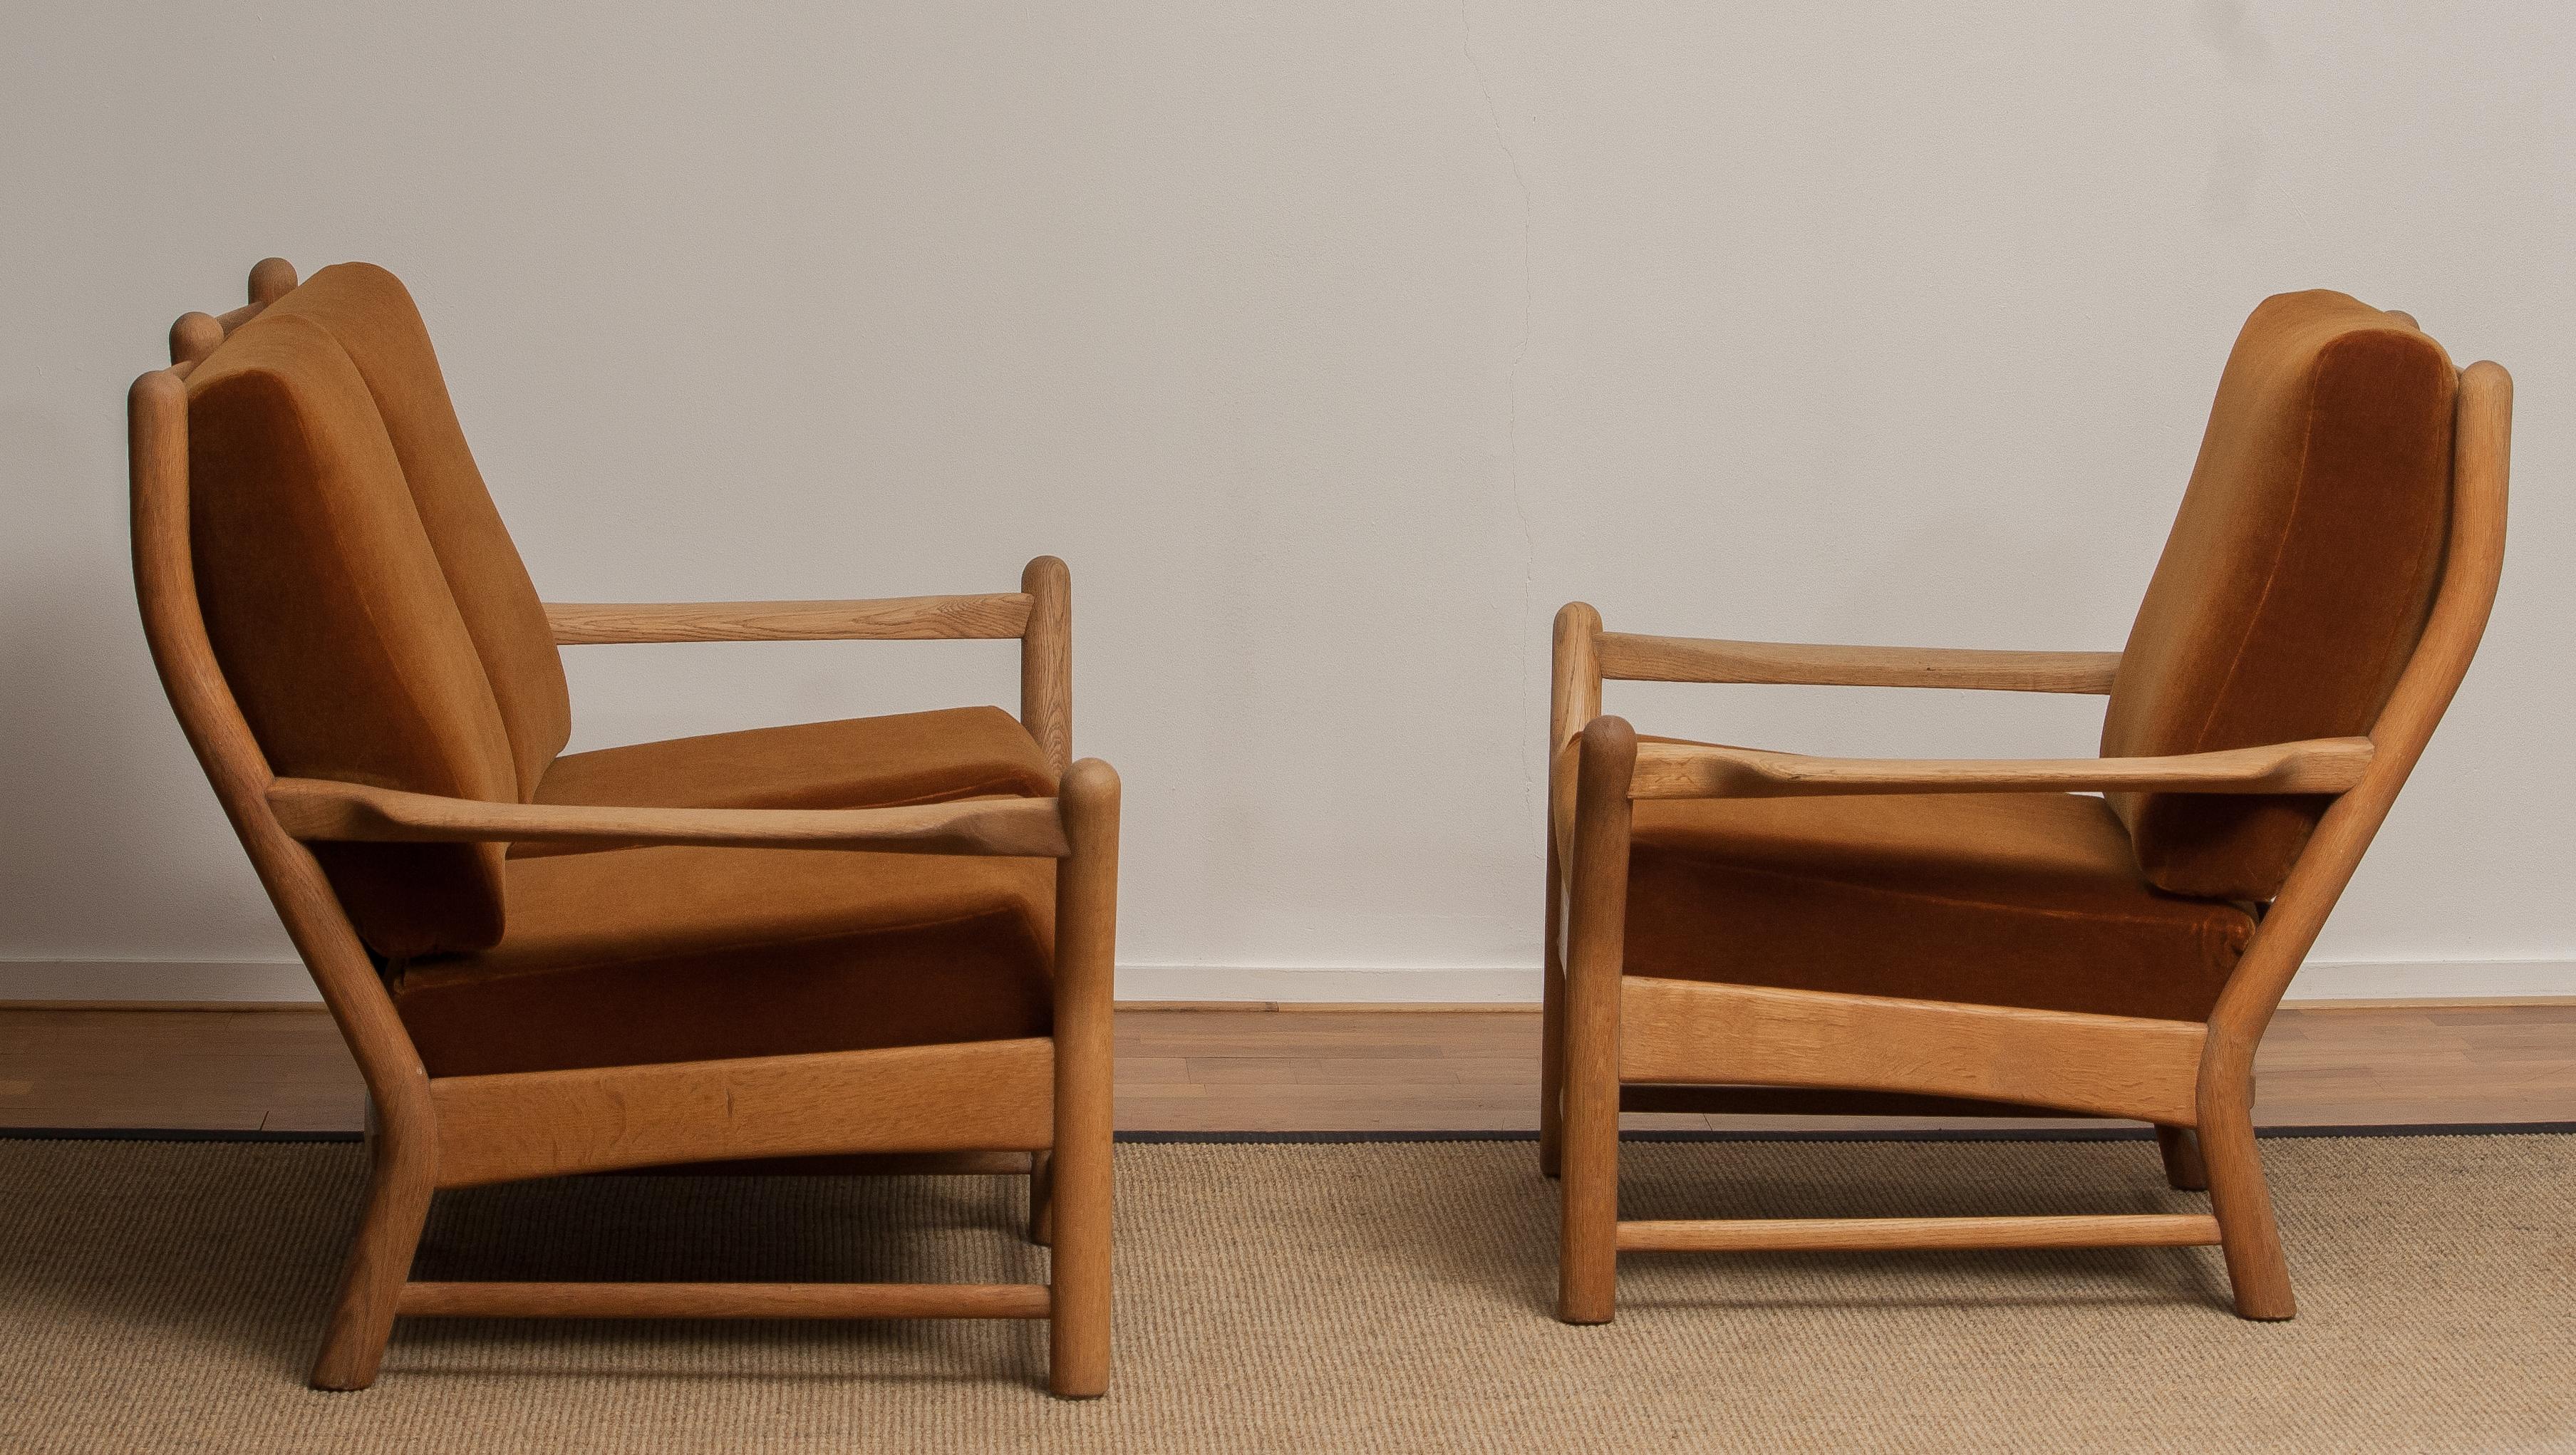 Danish 1950s, Oak and Brown Velvet Sofa and Chair Lounge Set from Denmark